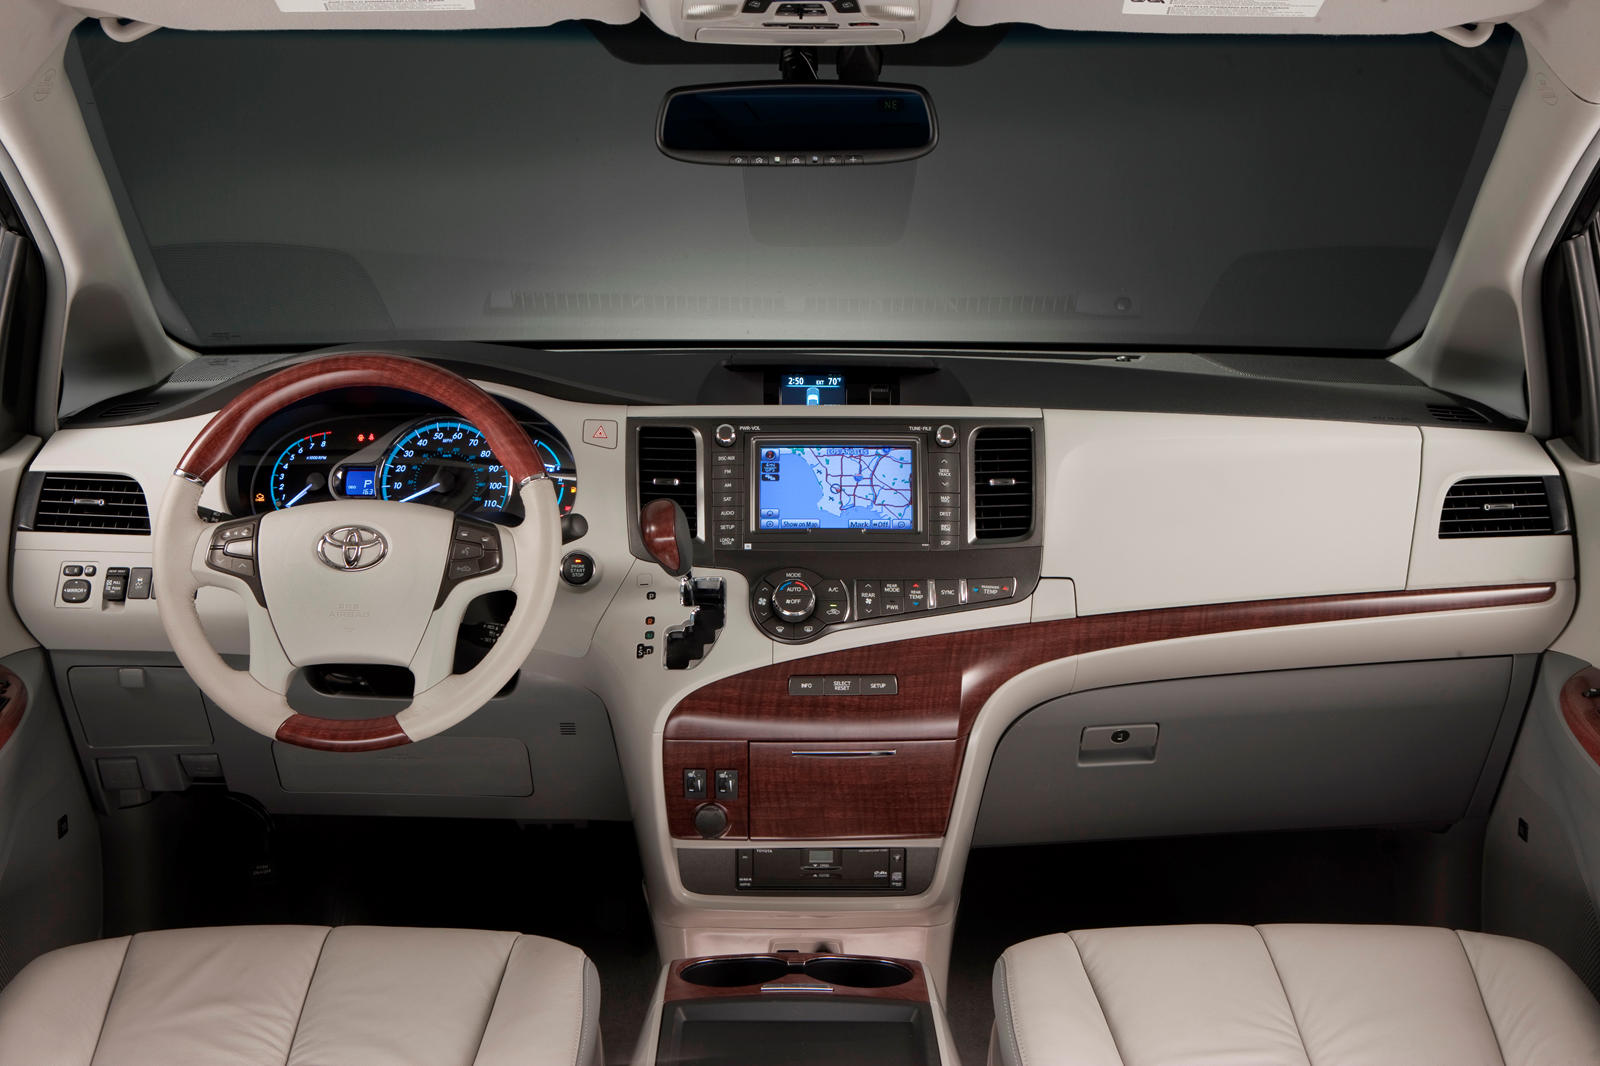 2014 Toyota Sienna Interior Photos | CarBuzz